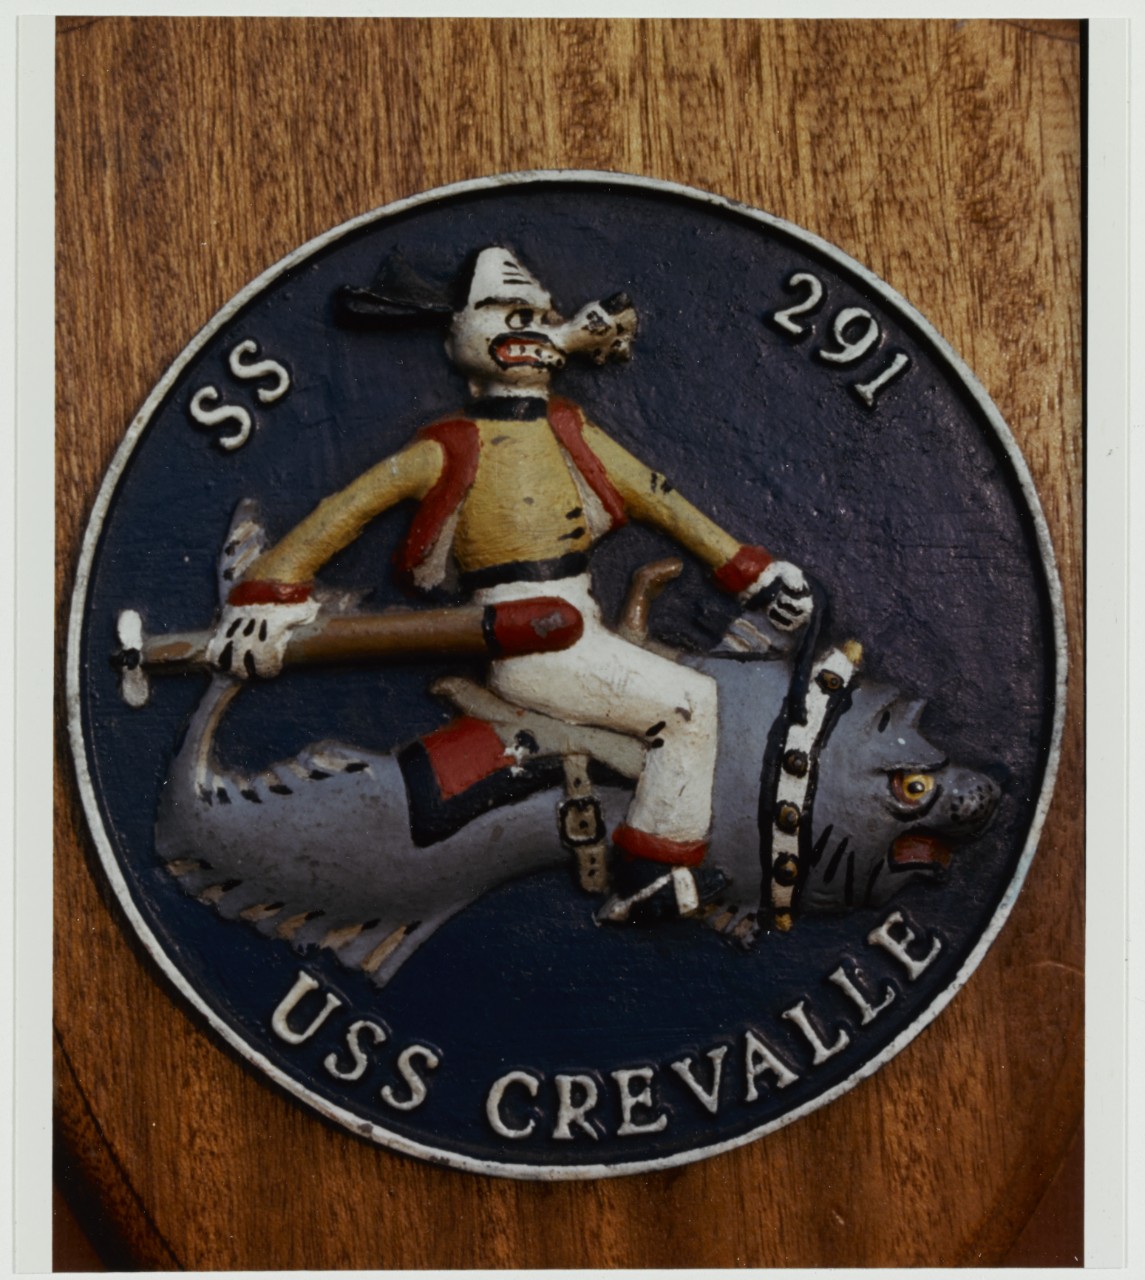 USS CREVALLE (SS-291). Emblem of 1950s era design